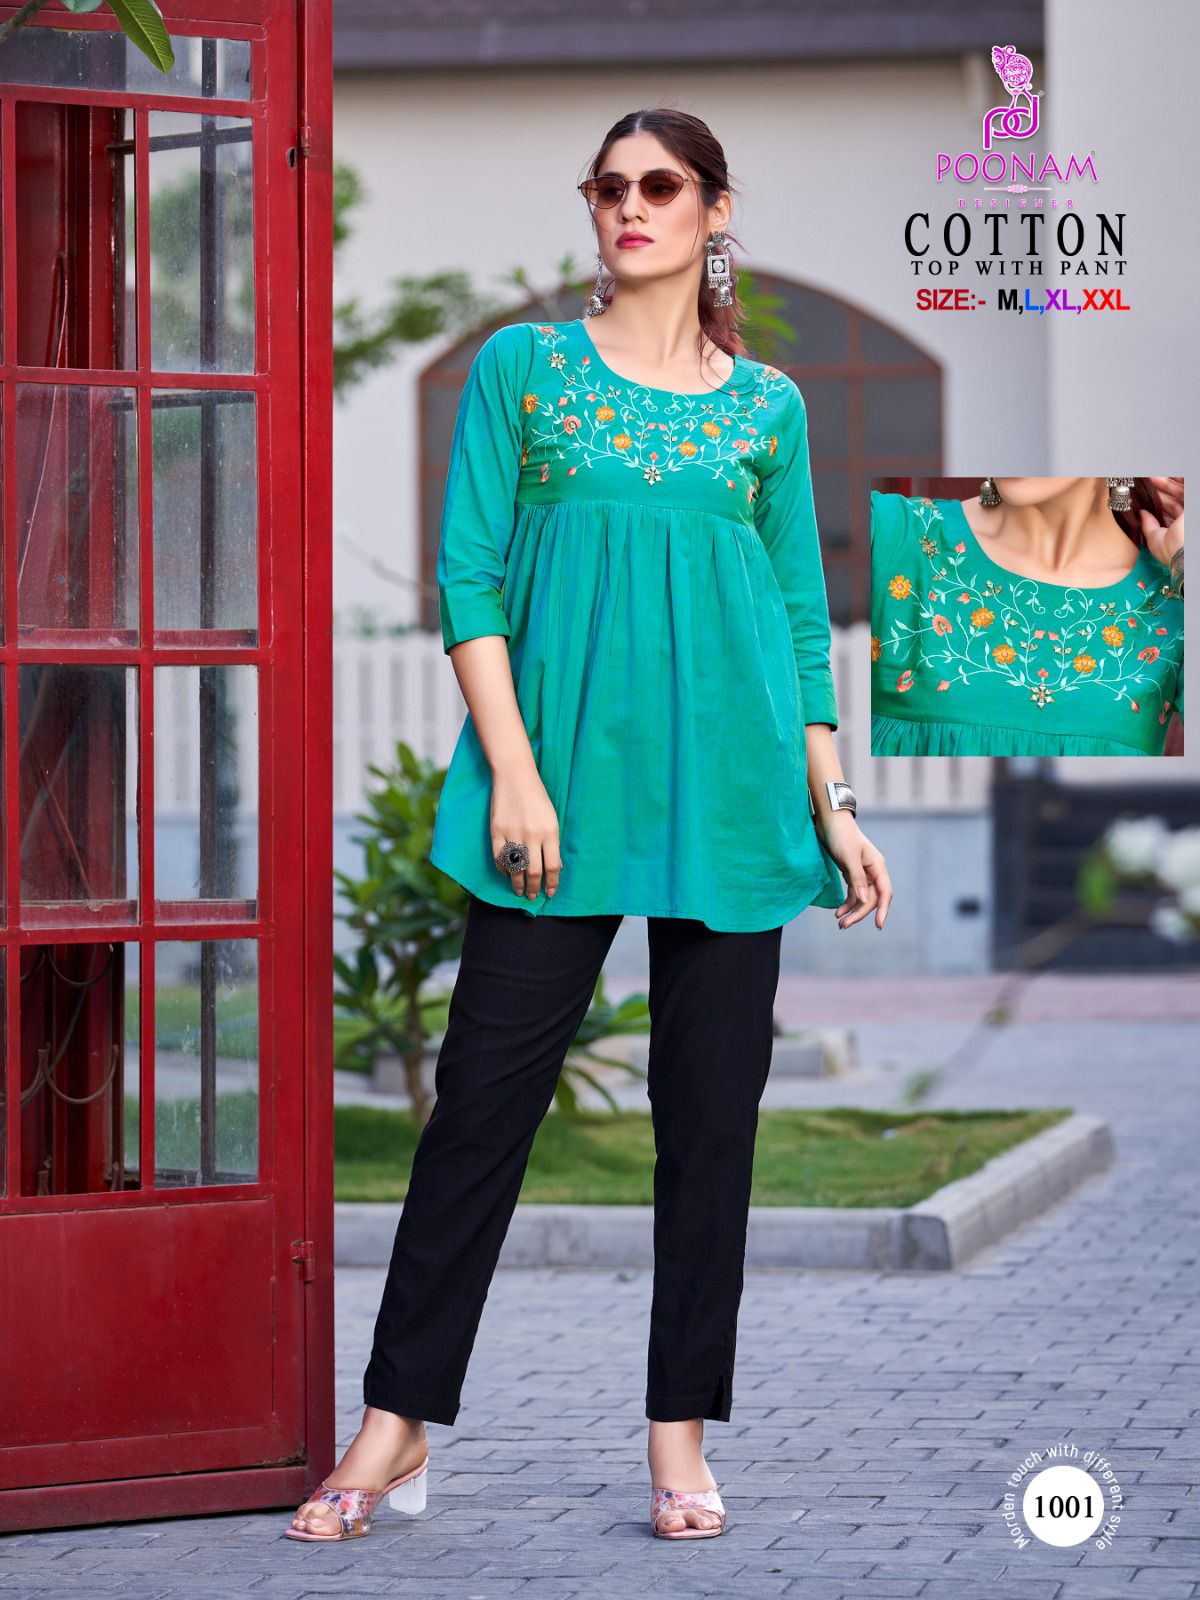 Poonam Cotton collection 2